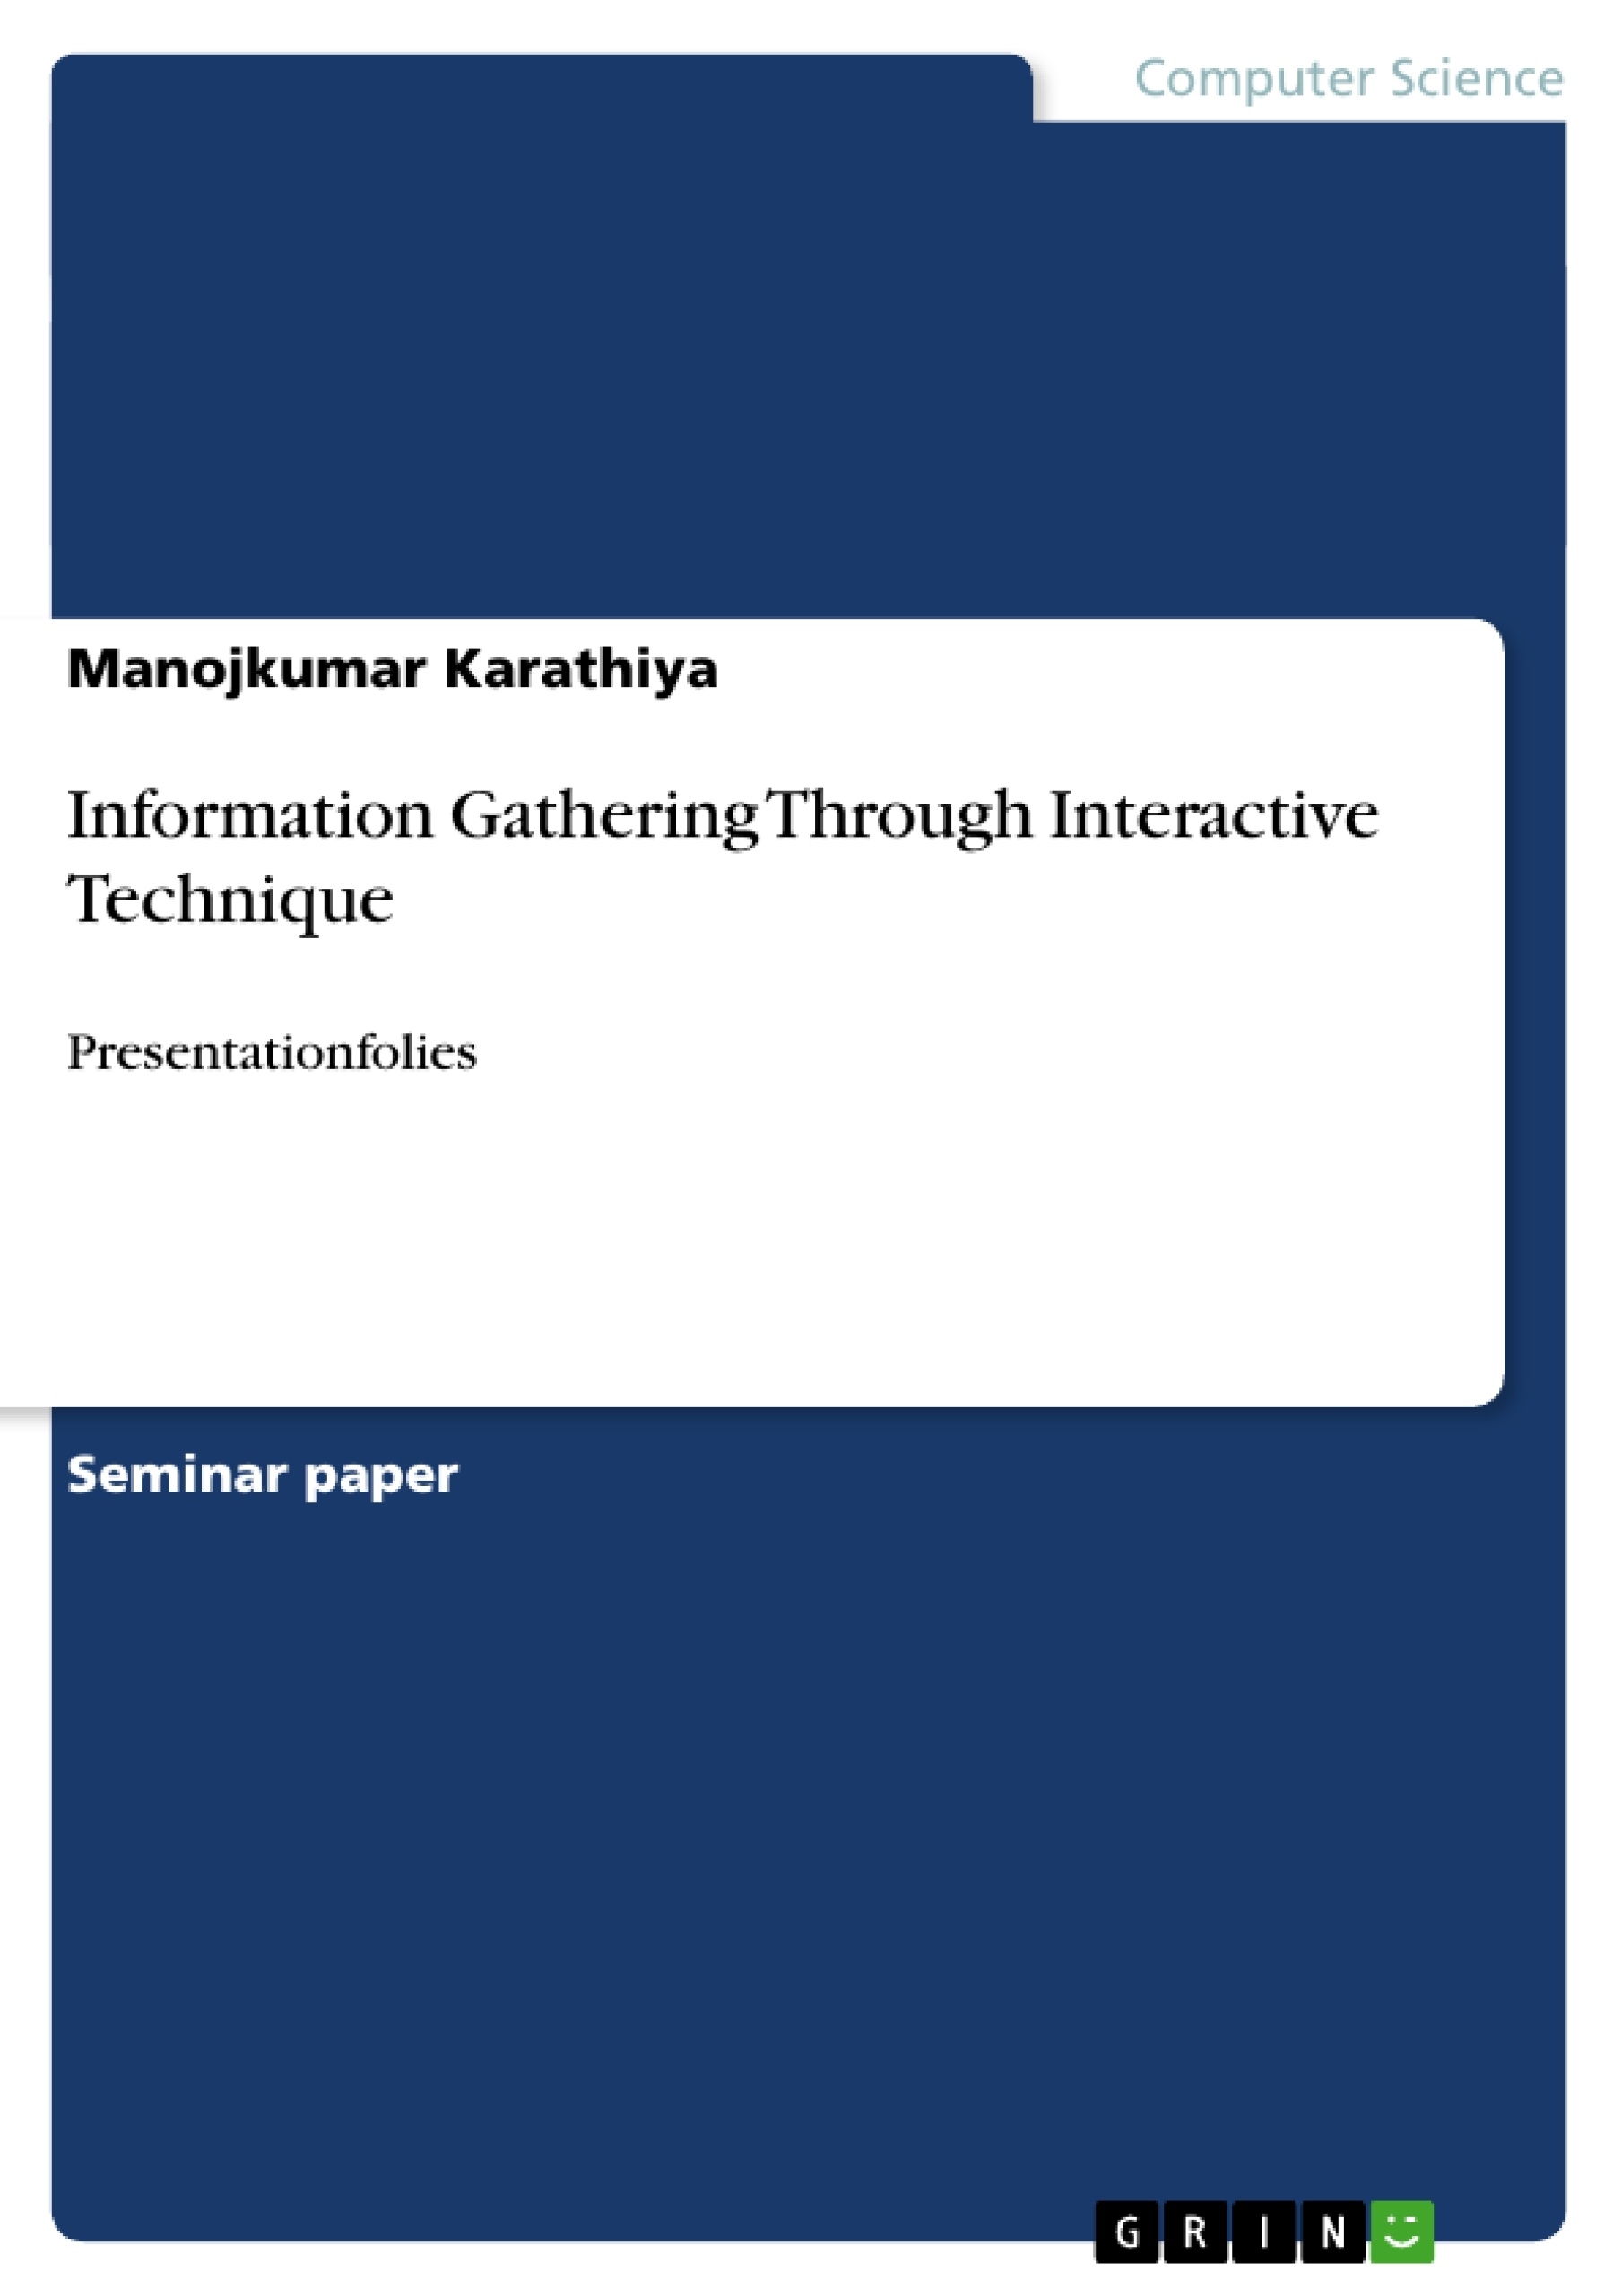 Title: Information Gathering Through Interactive Technique